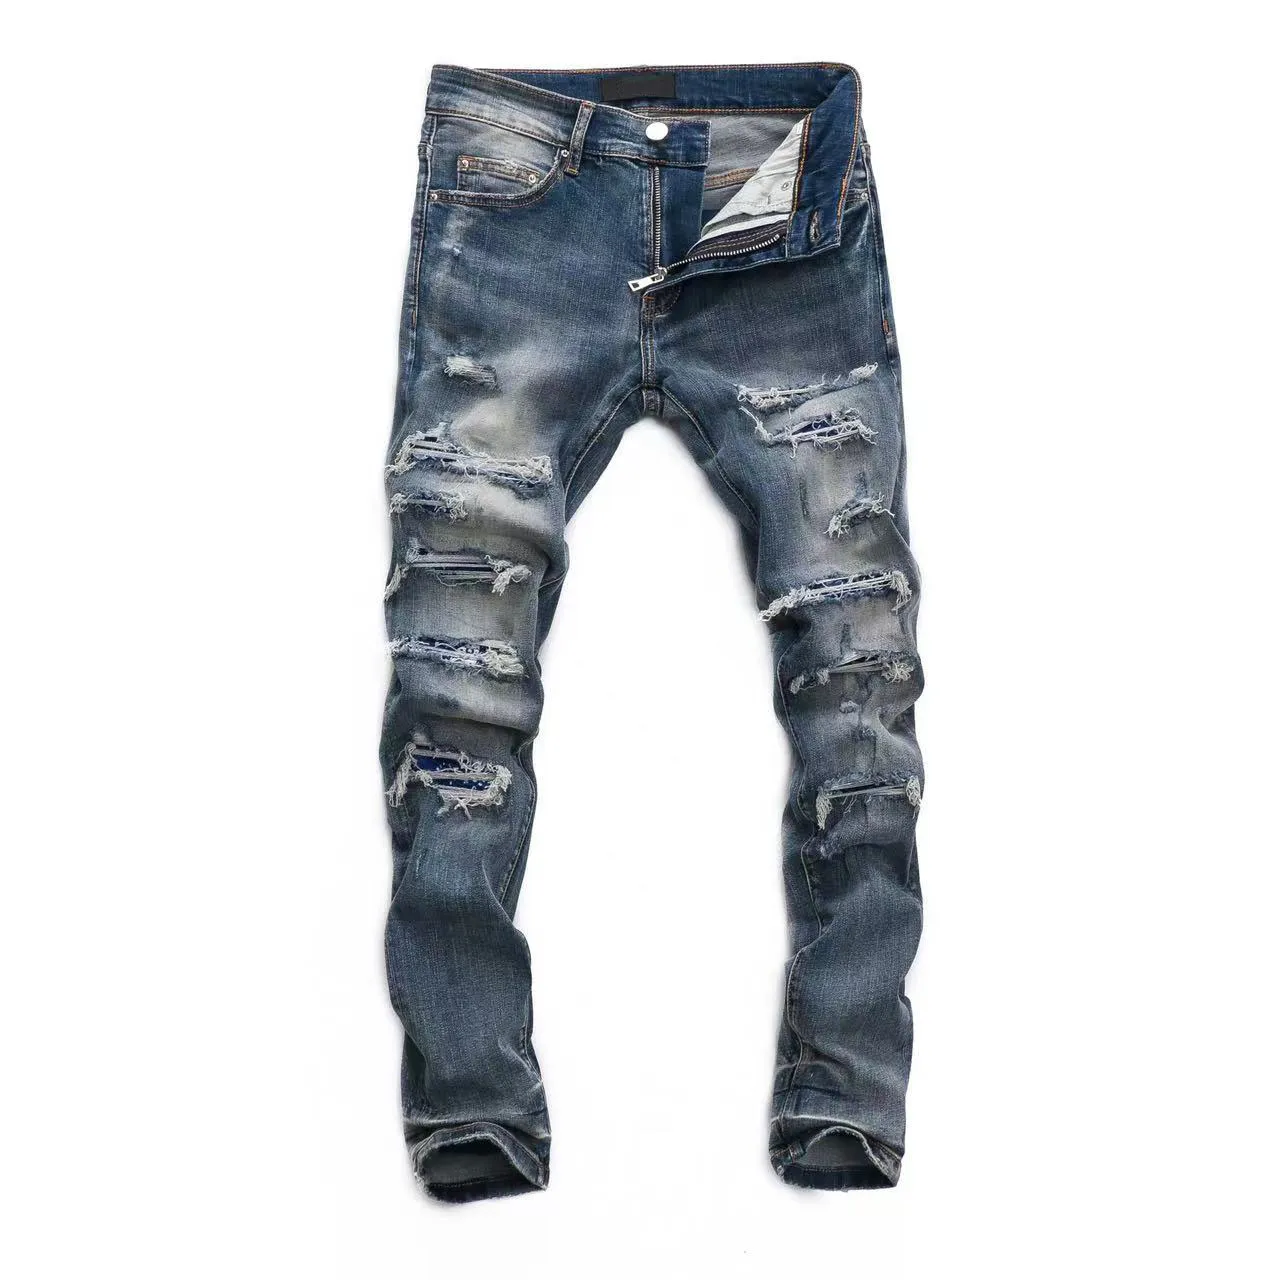 Jeans para hombre Motocycle Men trend Fashion HolesLuxury Denim Men Fashions. New wash old tie dye patch water ripple